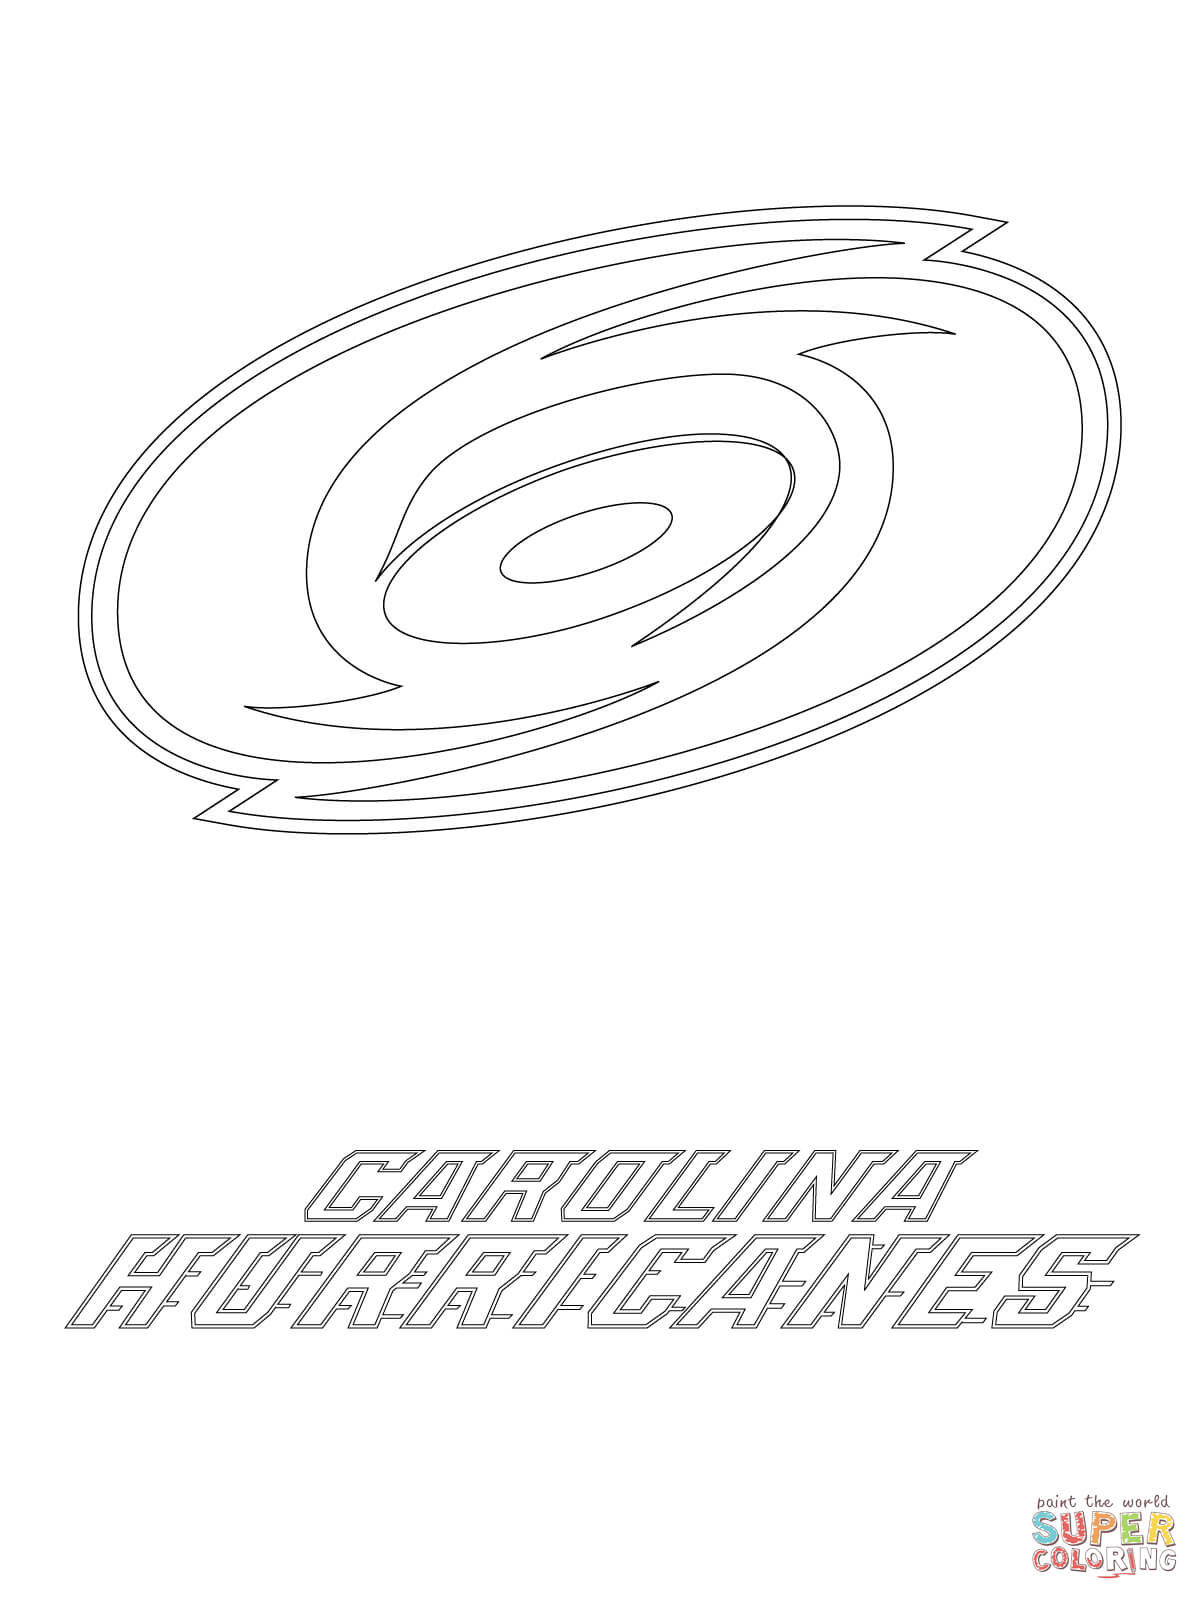 Carolina hurricanes logo free. Hurricane clipart coloring page